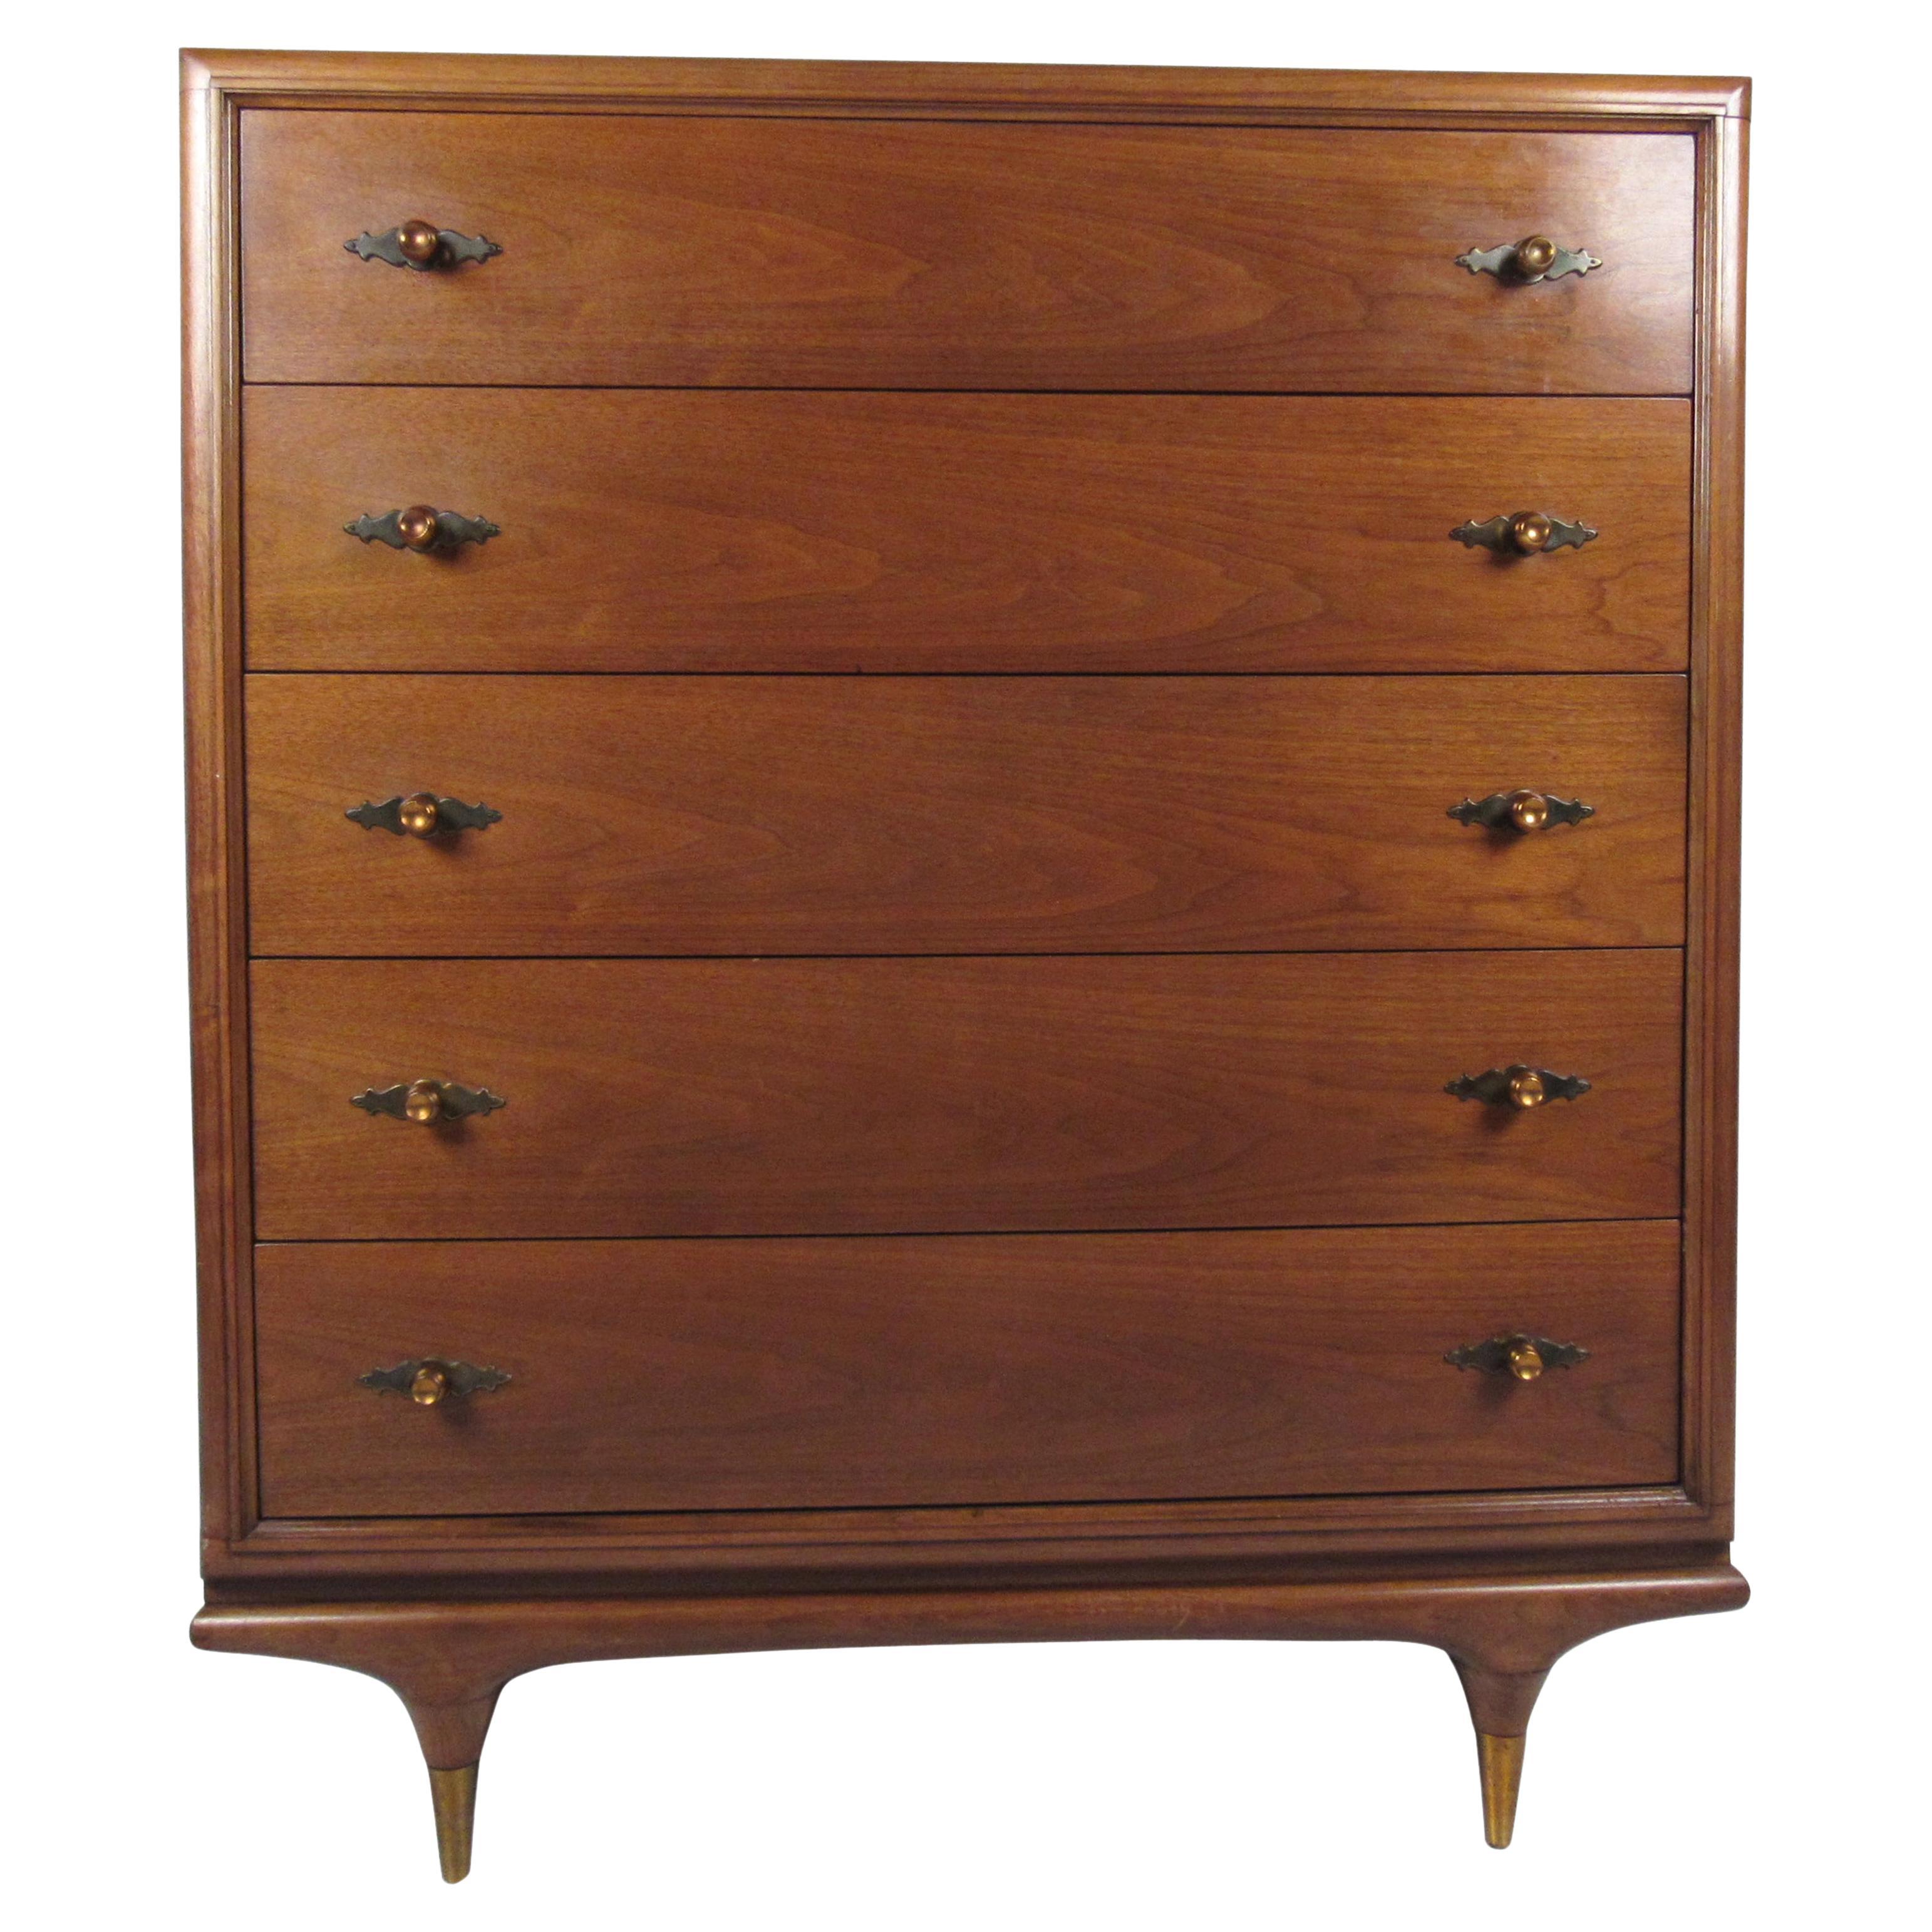 Mid-Century Kent Coffey "Continental" Series Dresser